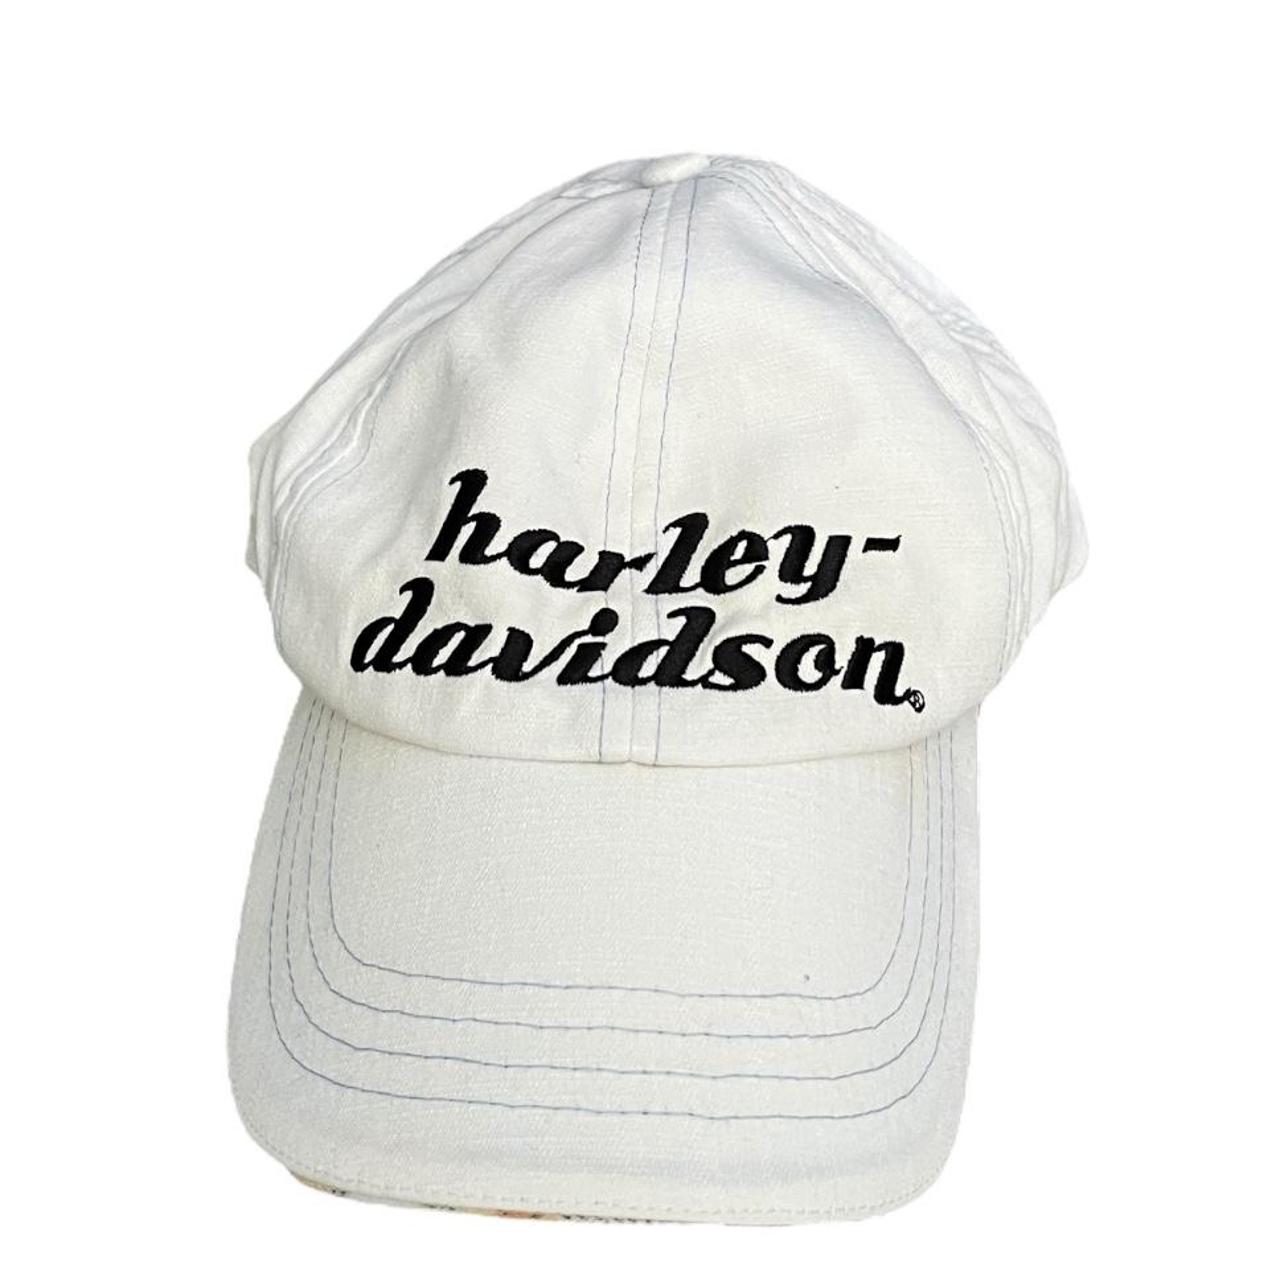 Harley Davidson Men's White and Yellow Hat